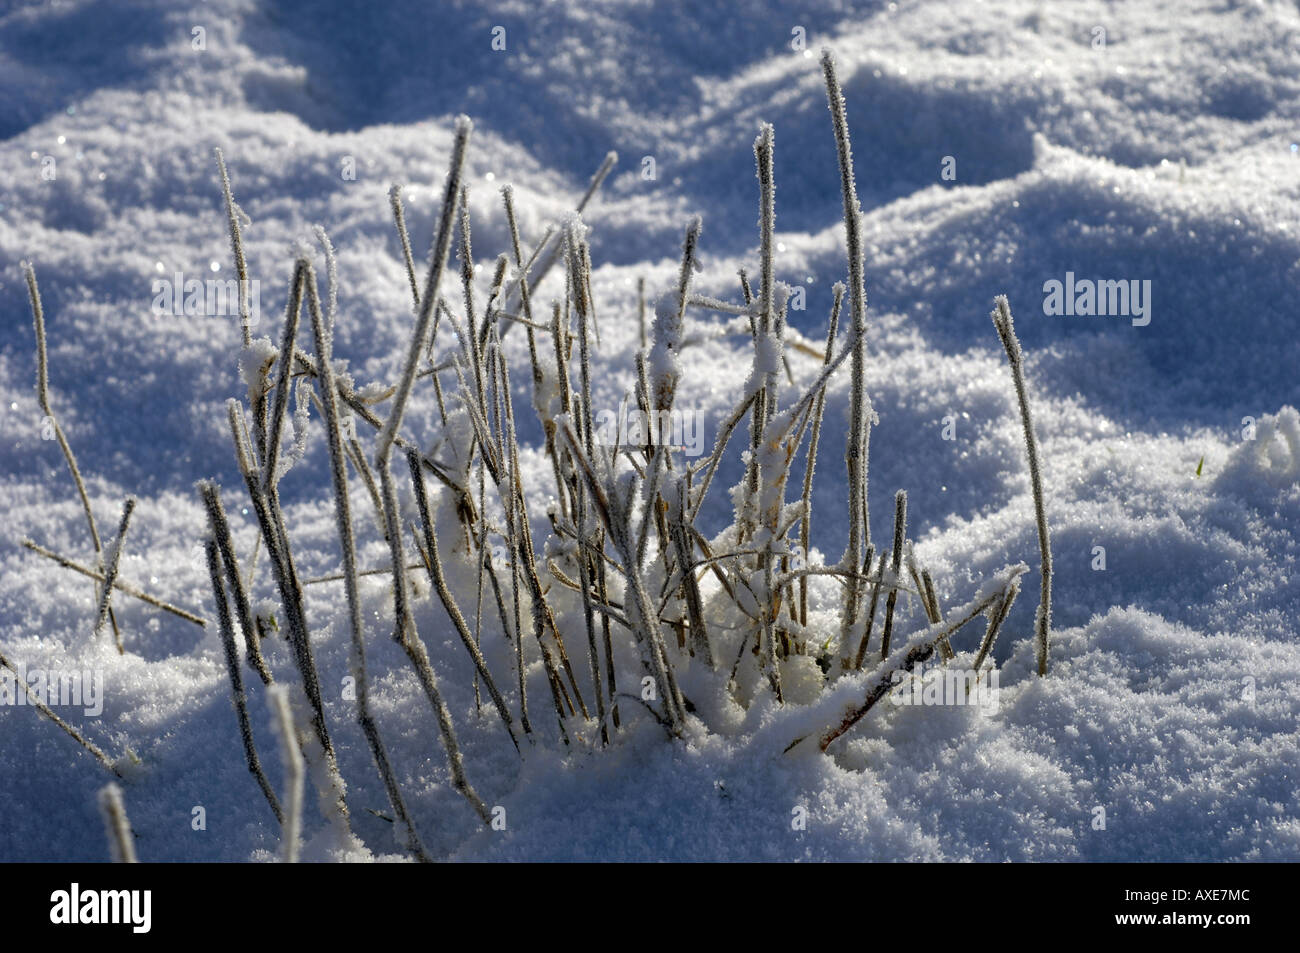 Plant stems showing through snow Stock Photo